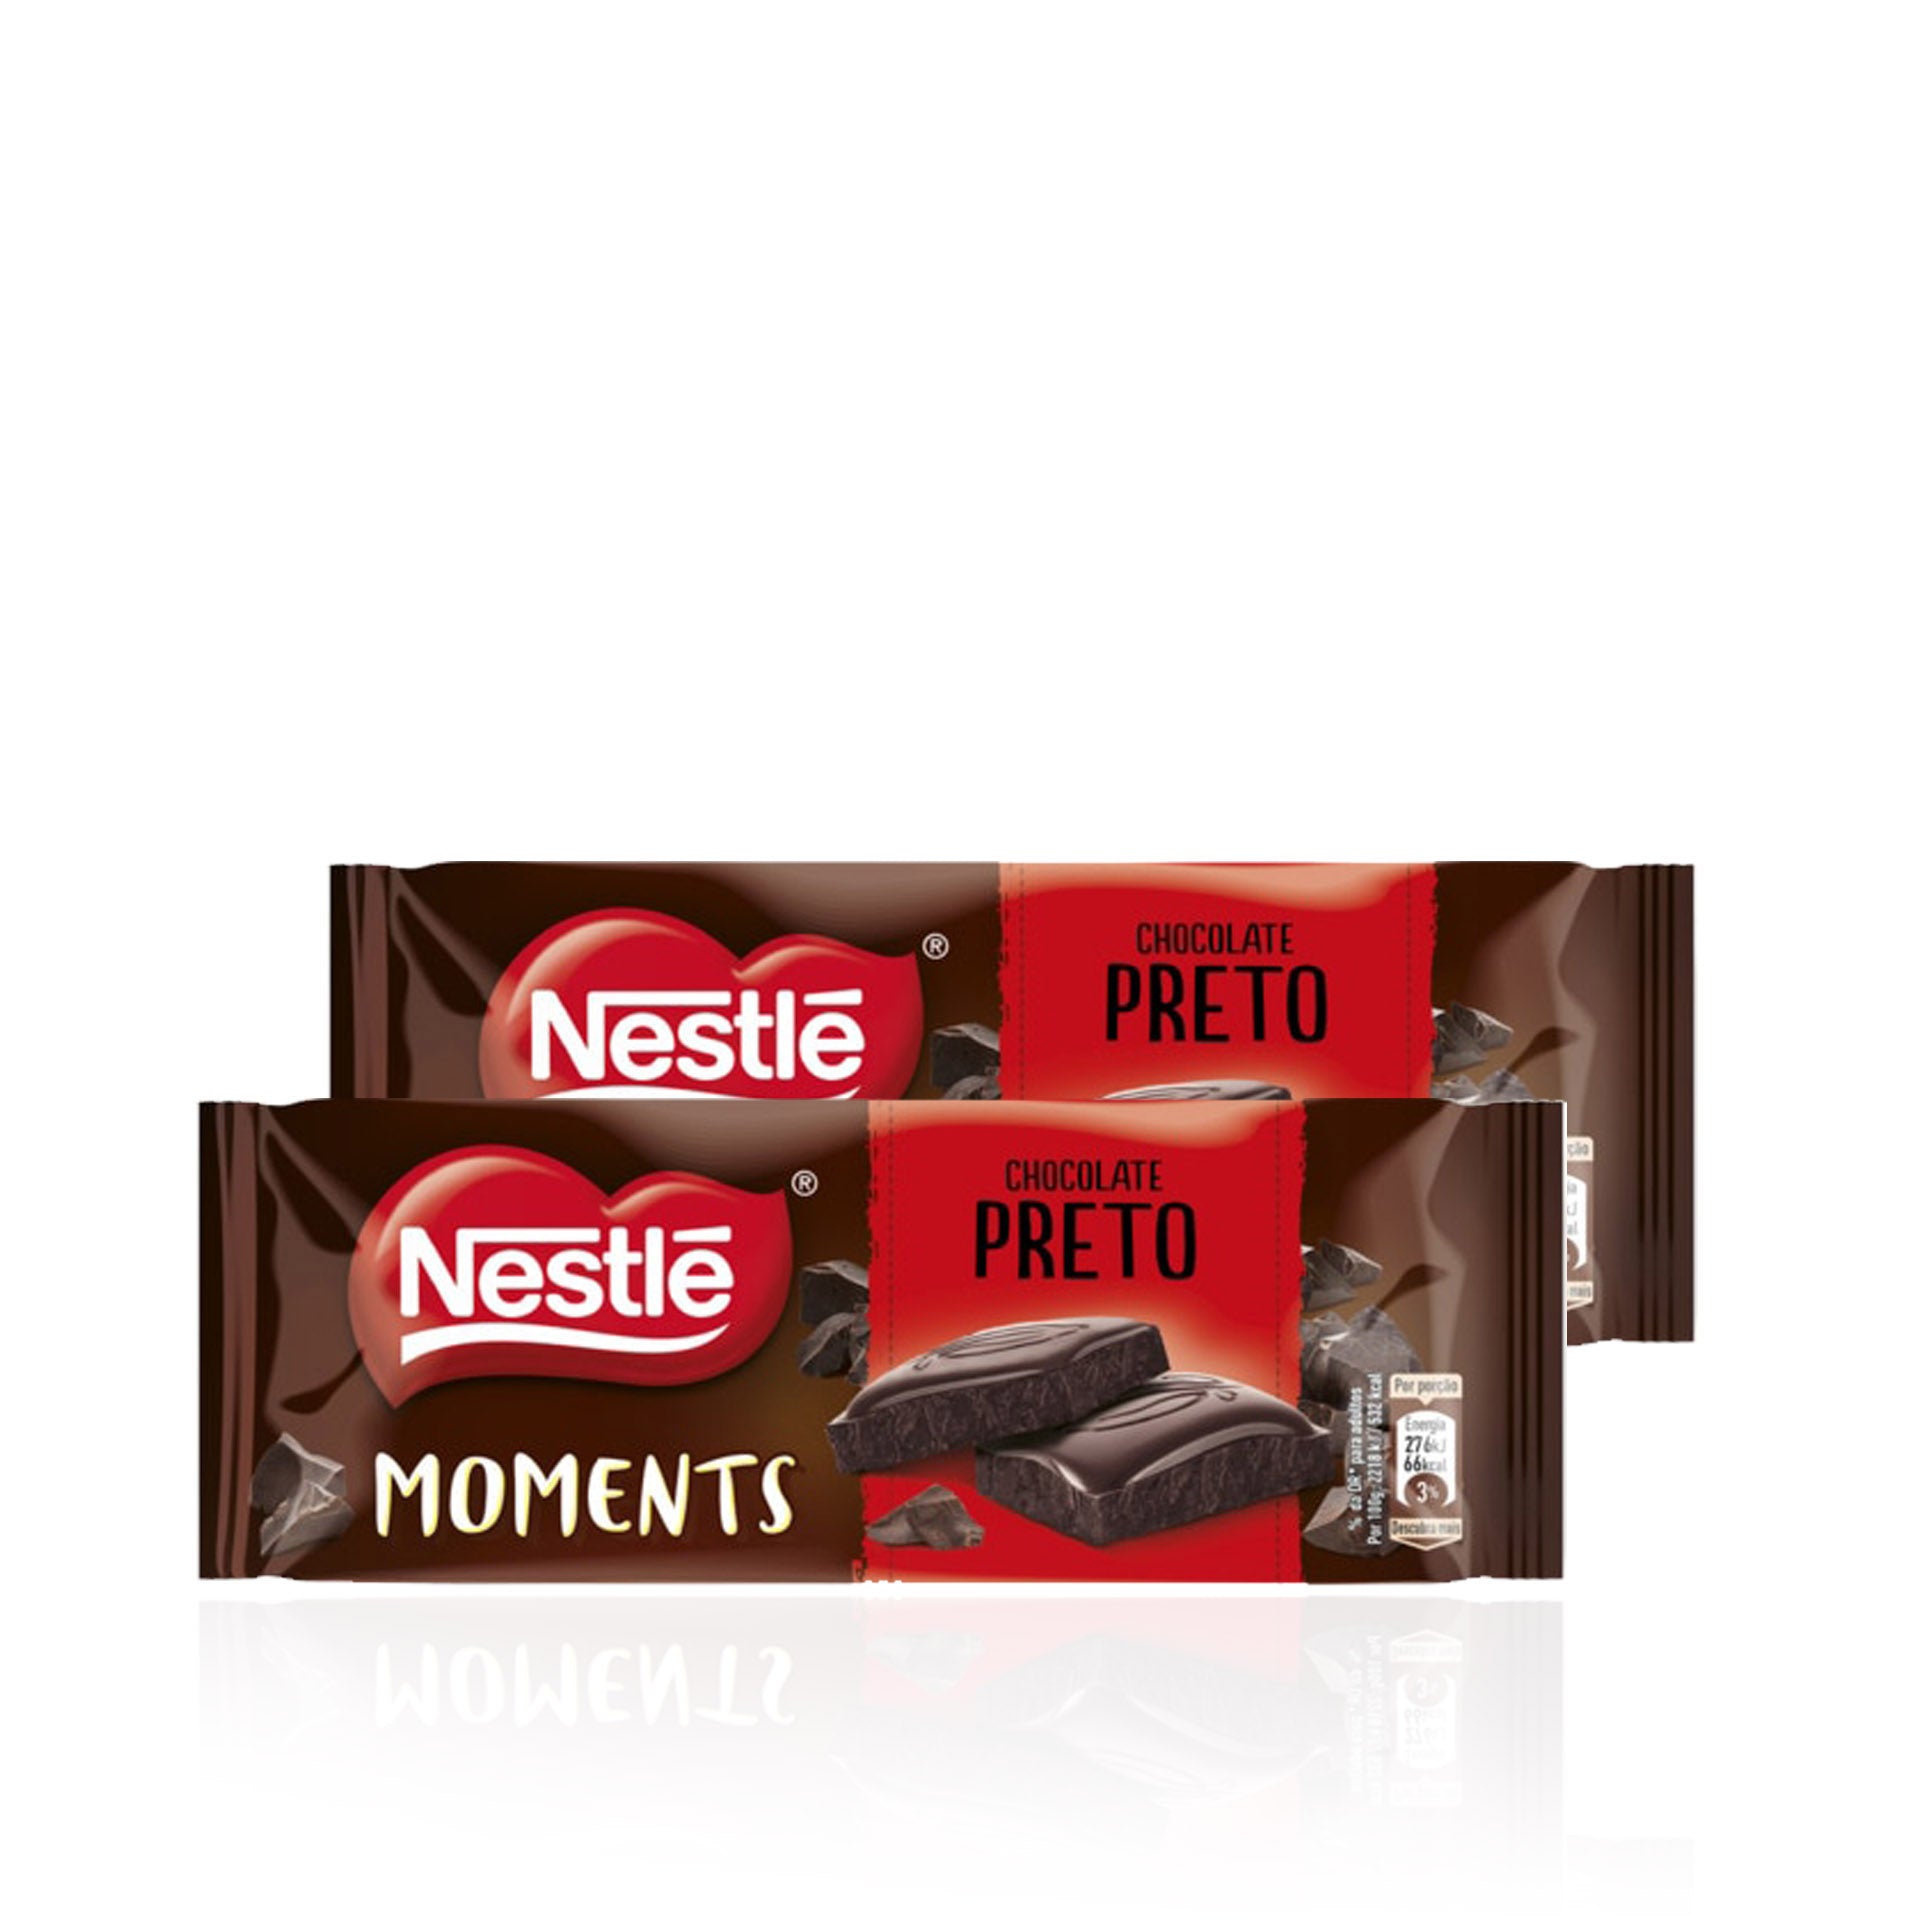 Nestlé Moments Tablete Chocolate Preto 90 gr - Pack 2 x 90 gr